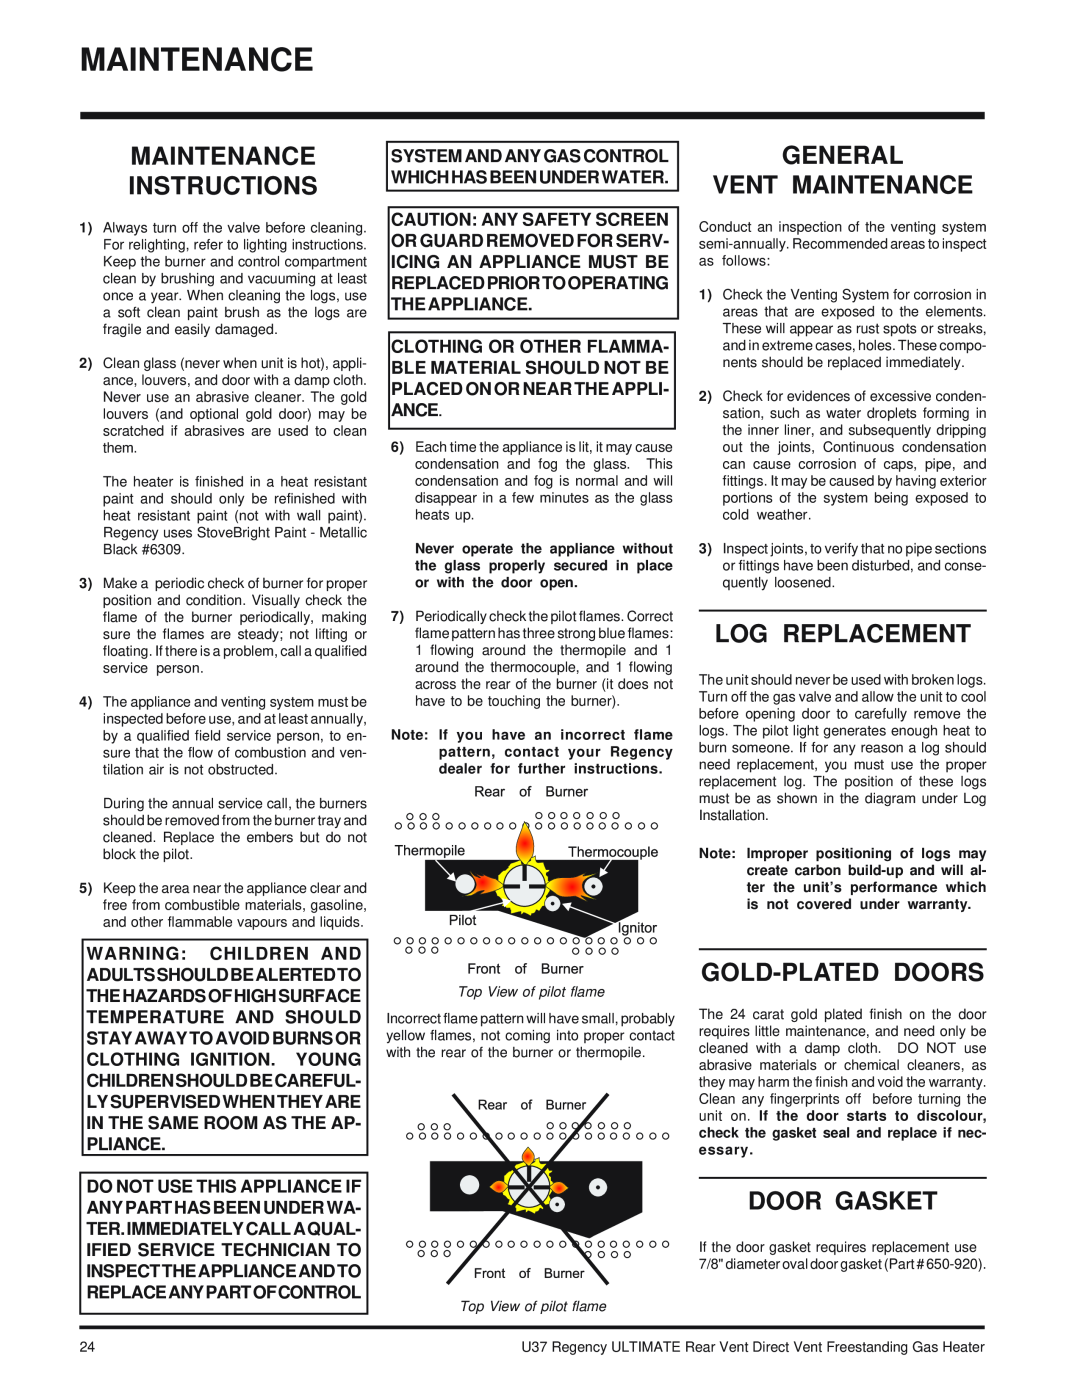 Regency U37-LP PROPANE Maintenance Instructions, General Vent Maintenance, Log Replacement, Gold-Plateddoors 